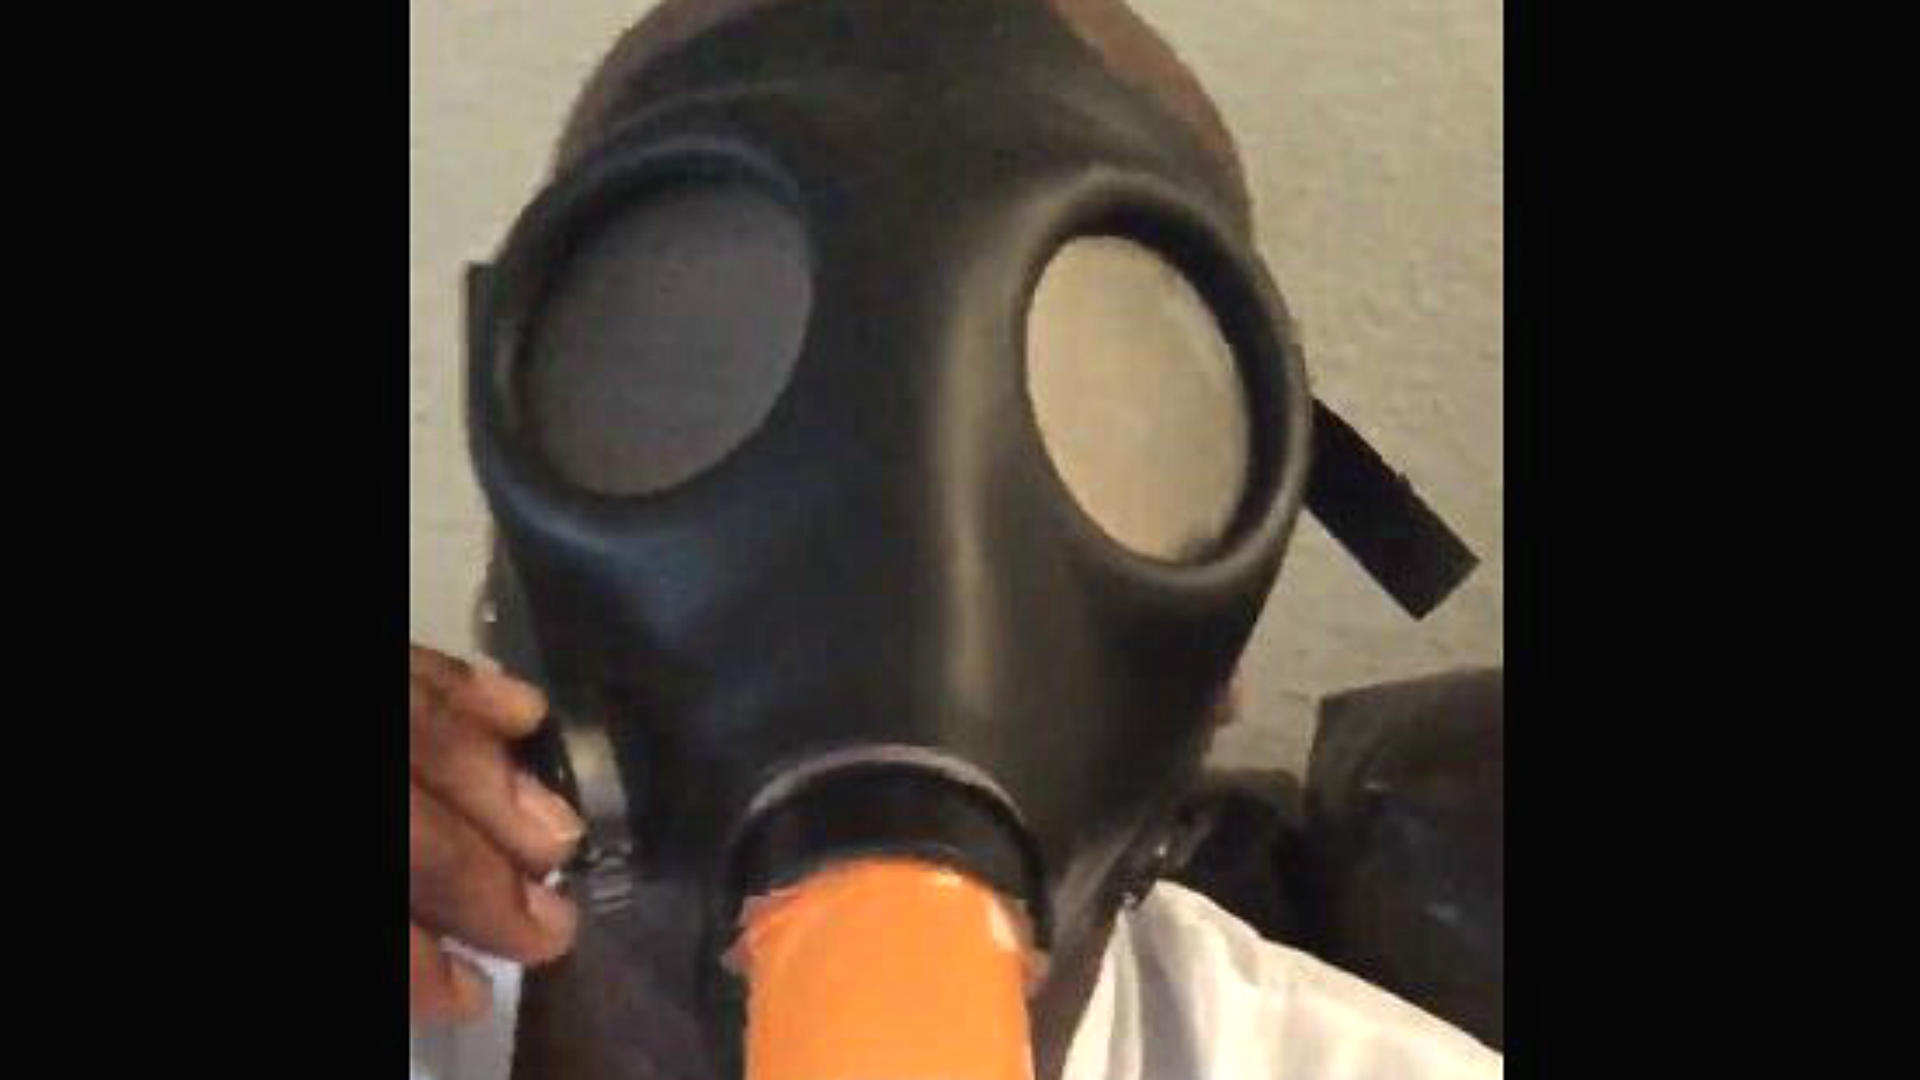 cartoon smoking a gas mask weed